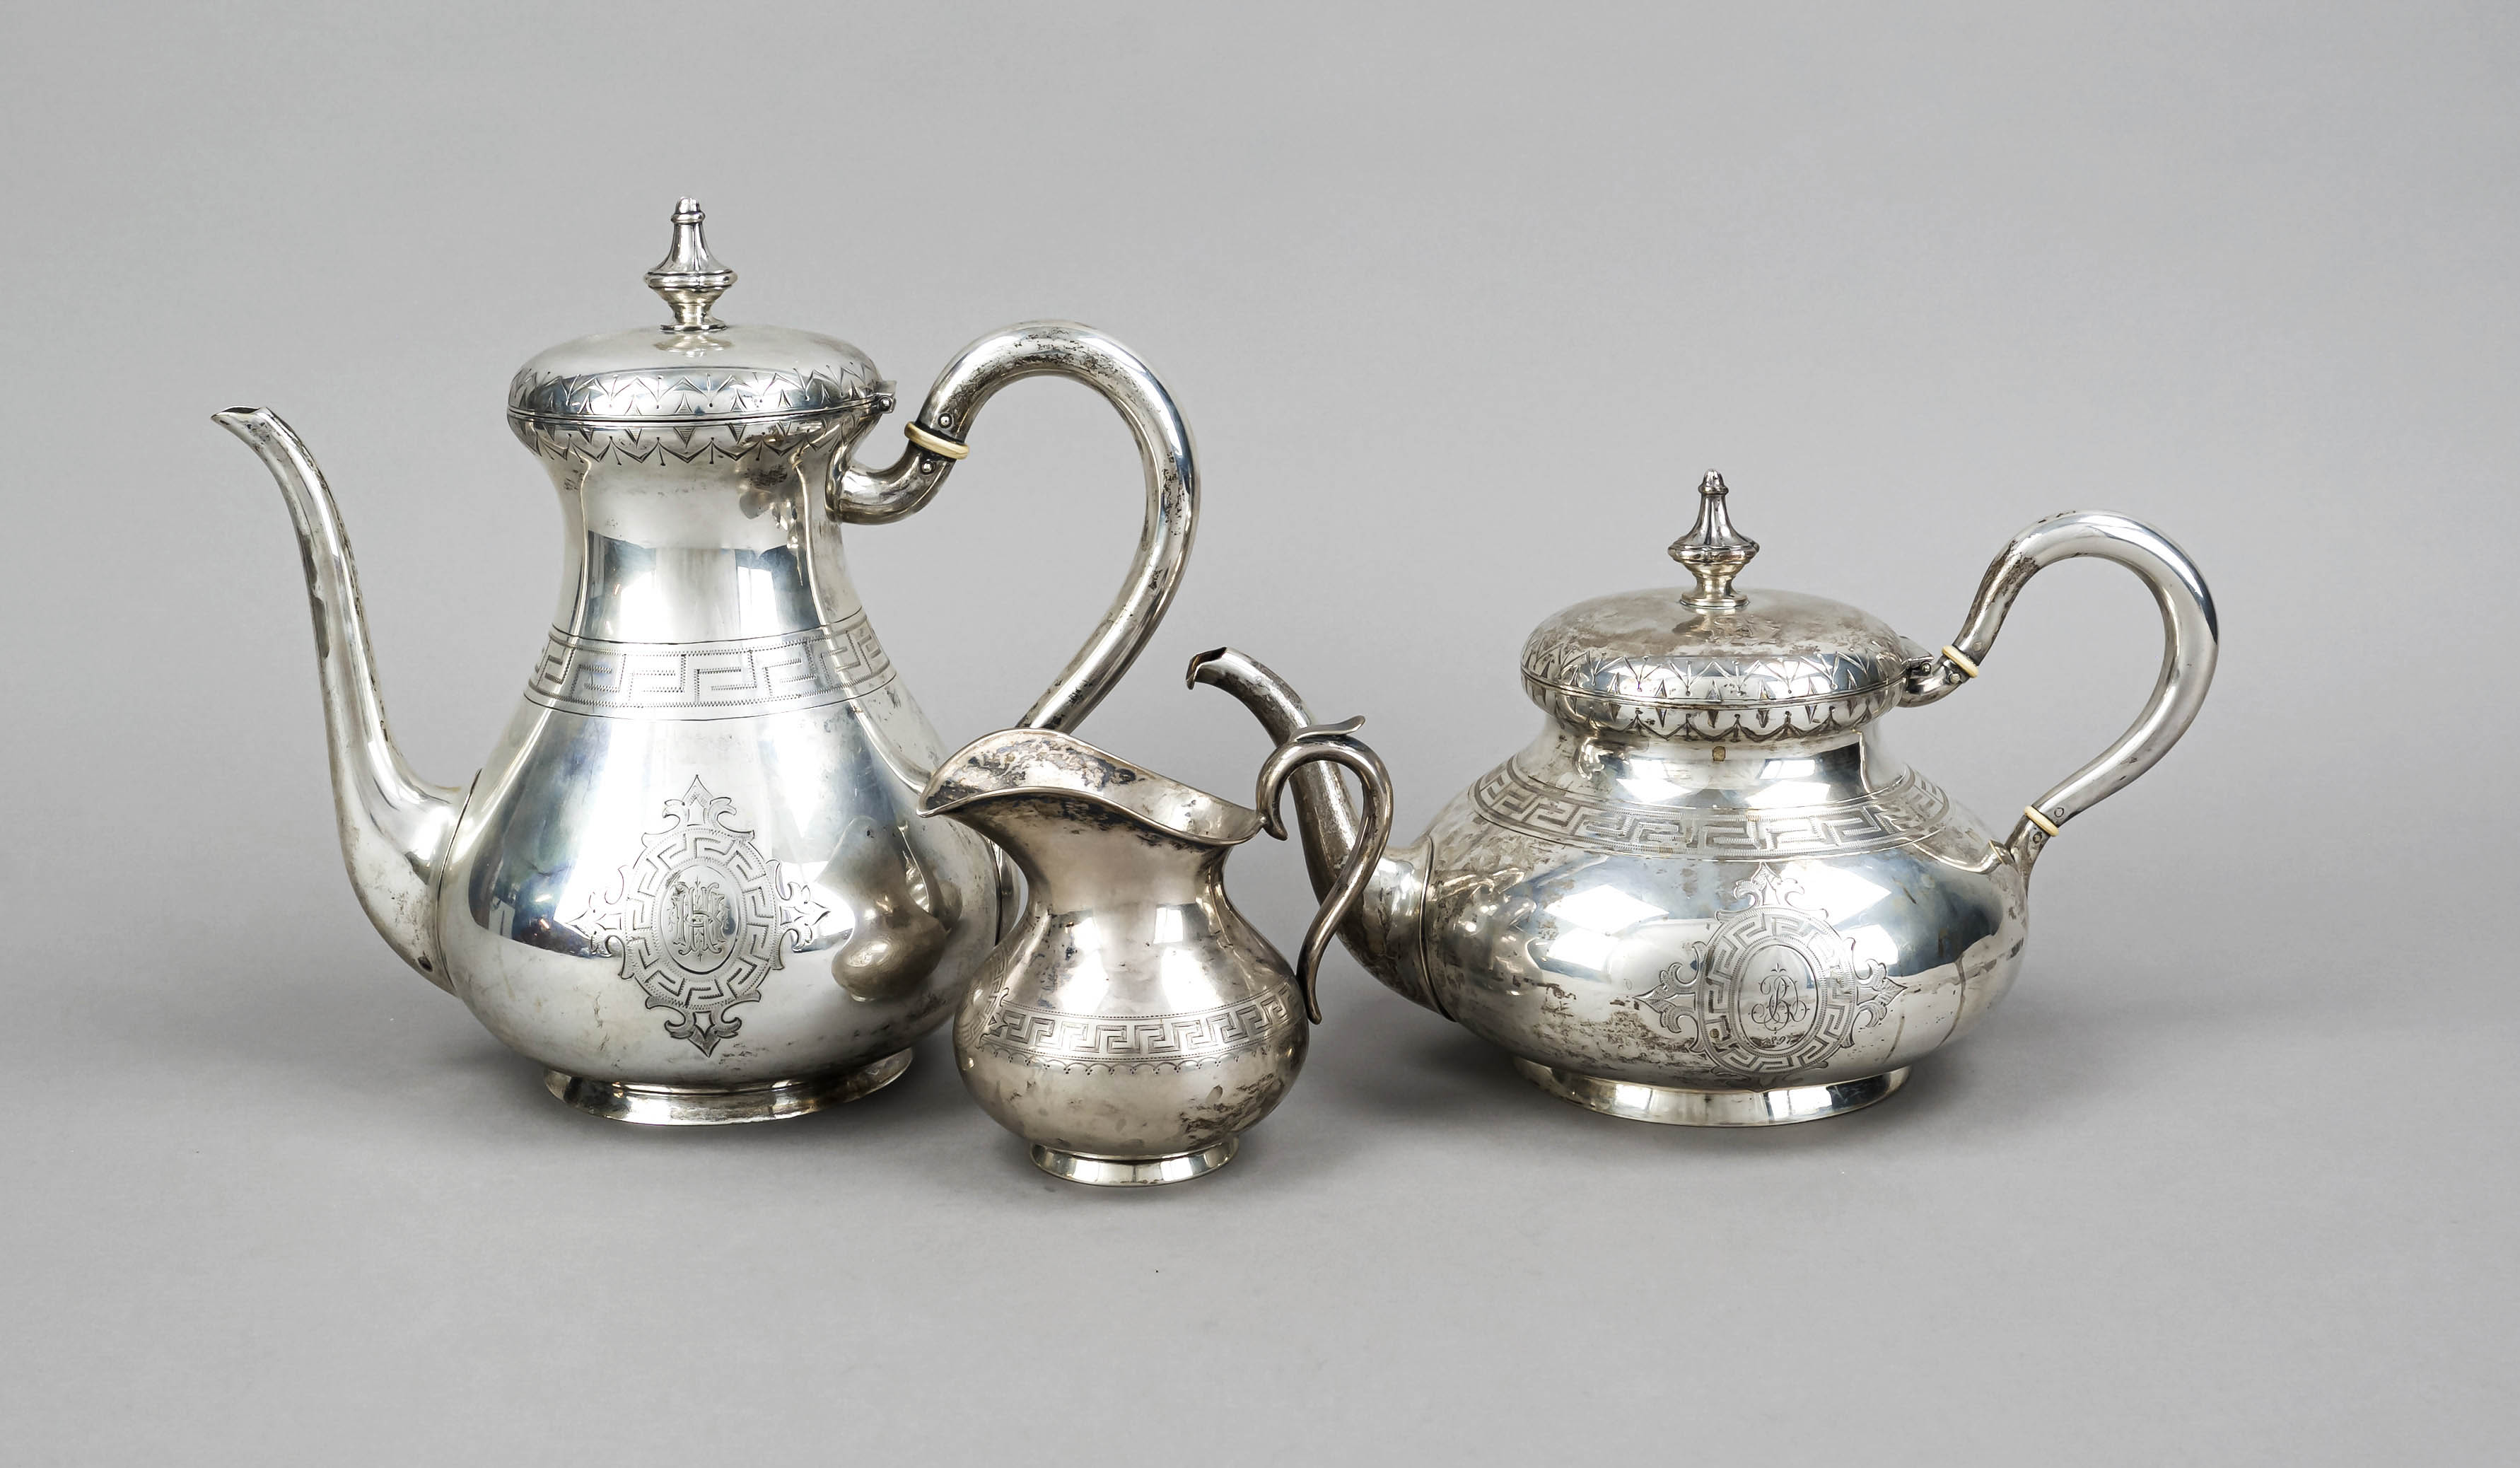 Tea and coffee pot, German, late 19th century, maker's mark 1x Koch & Bergfeld, Bremen, each with